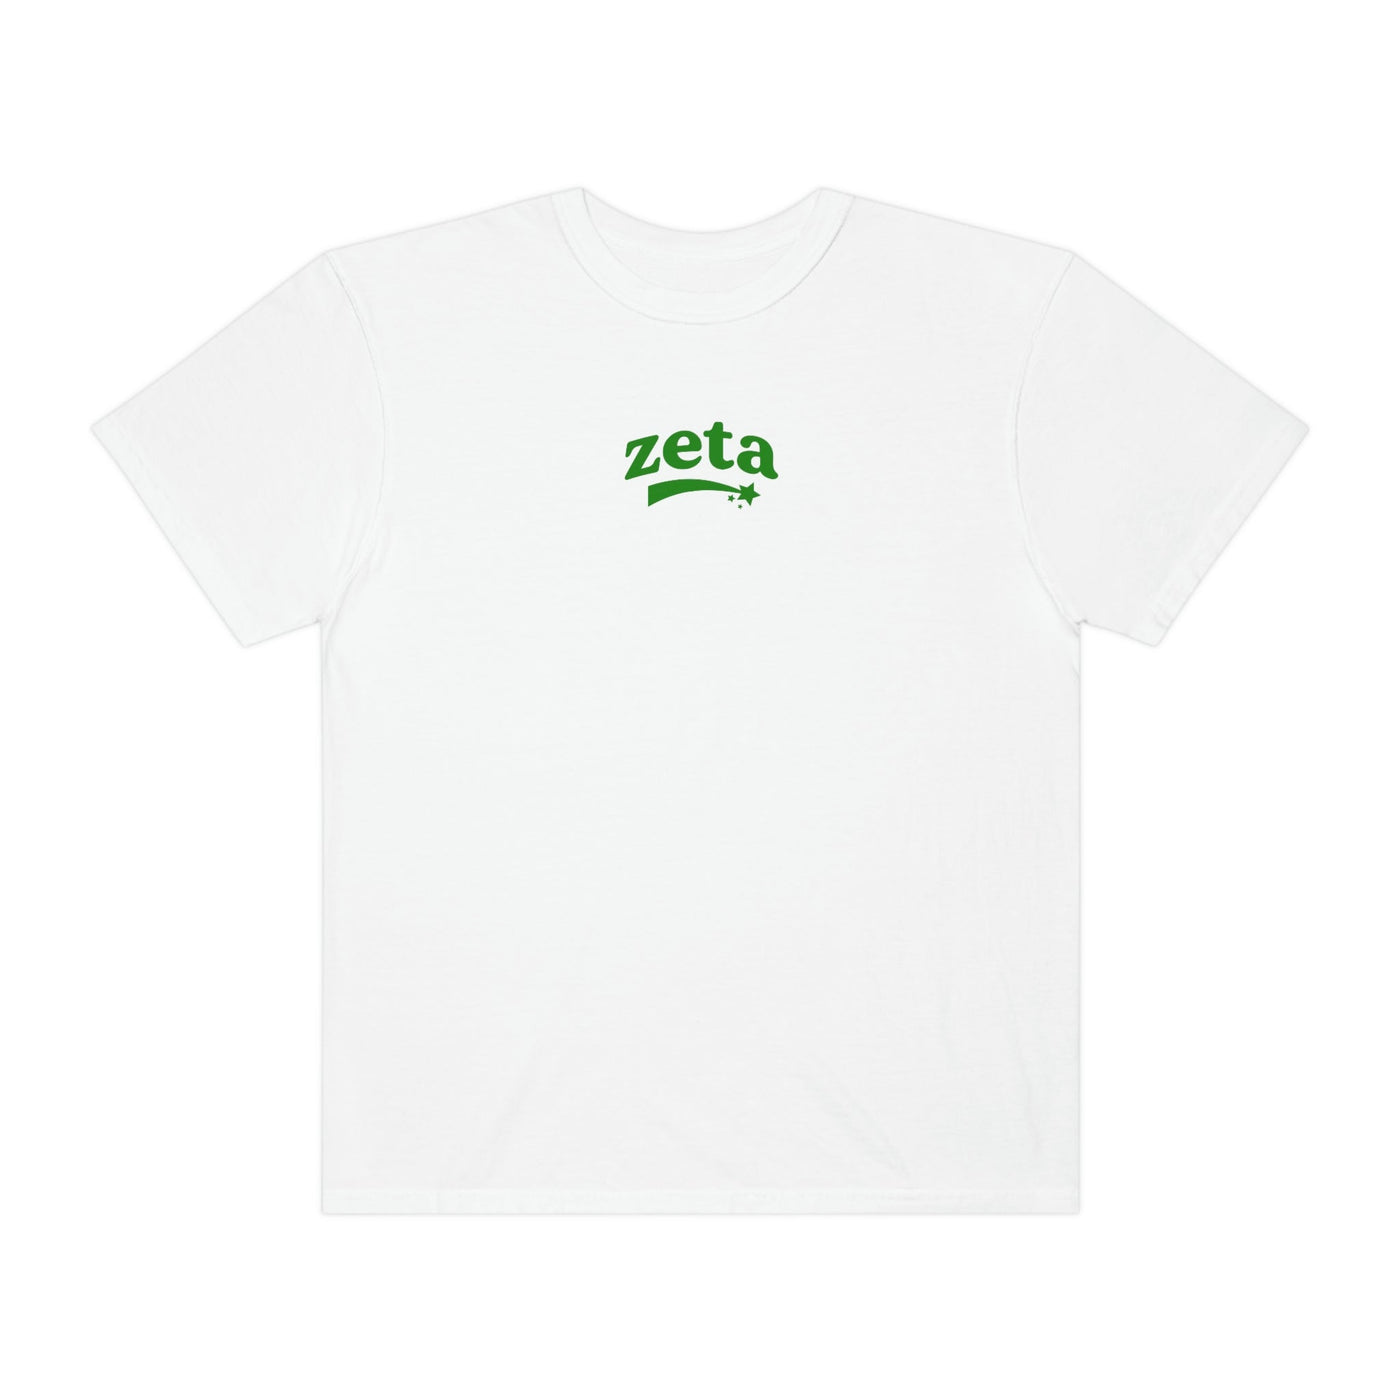 Zeta Tau Alpha Planet T-shirt | Be Kind to the Planet Trendy Sorority shirt